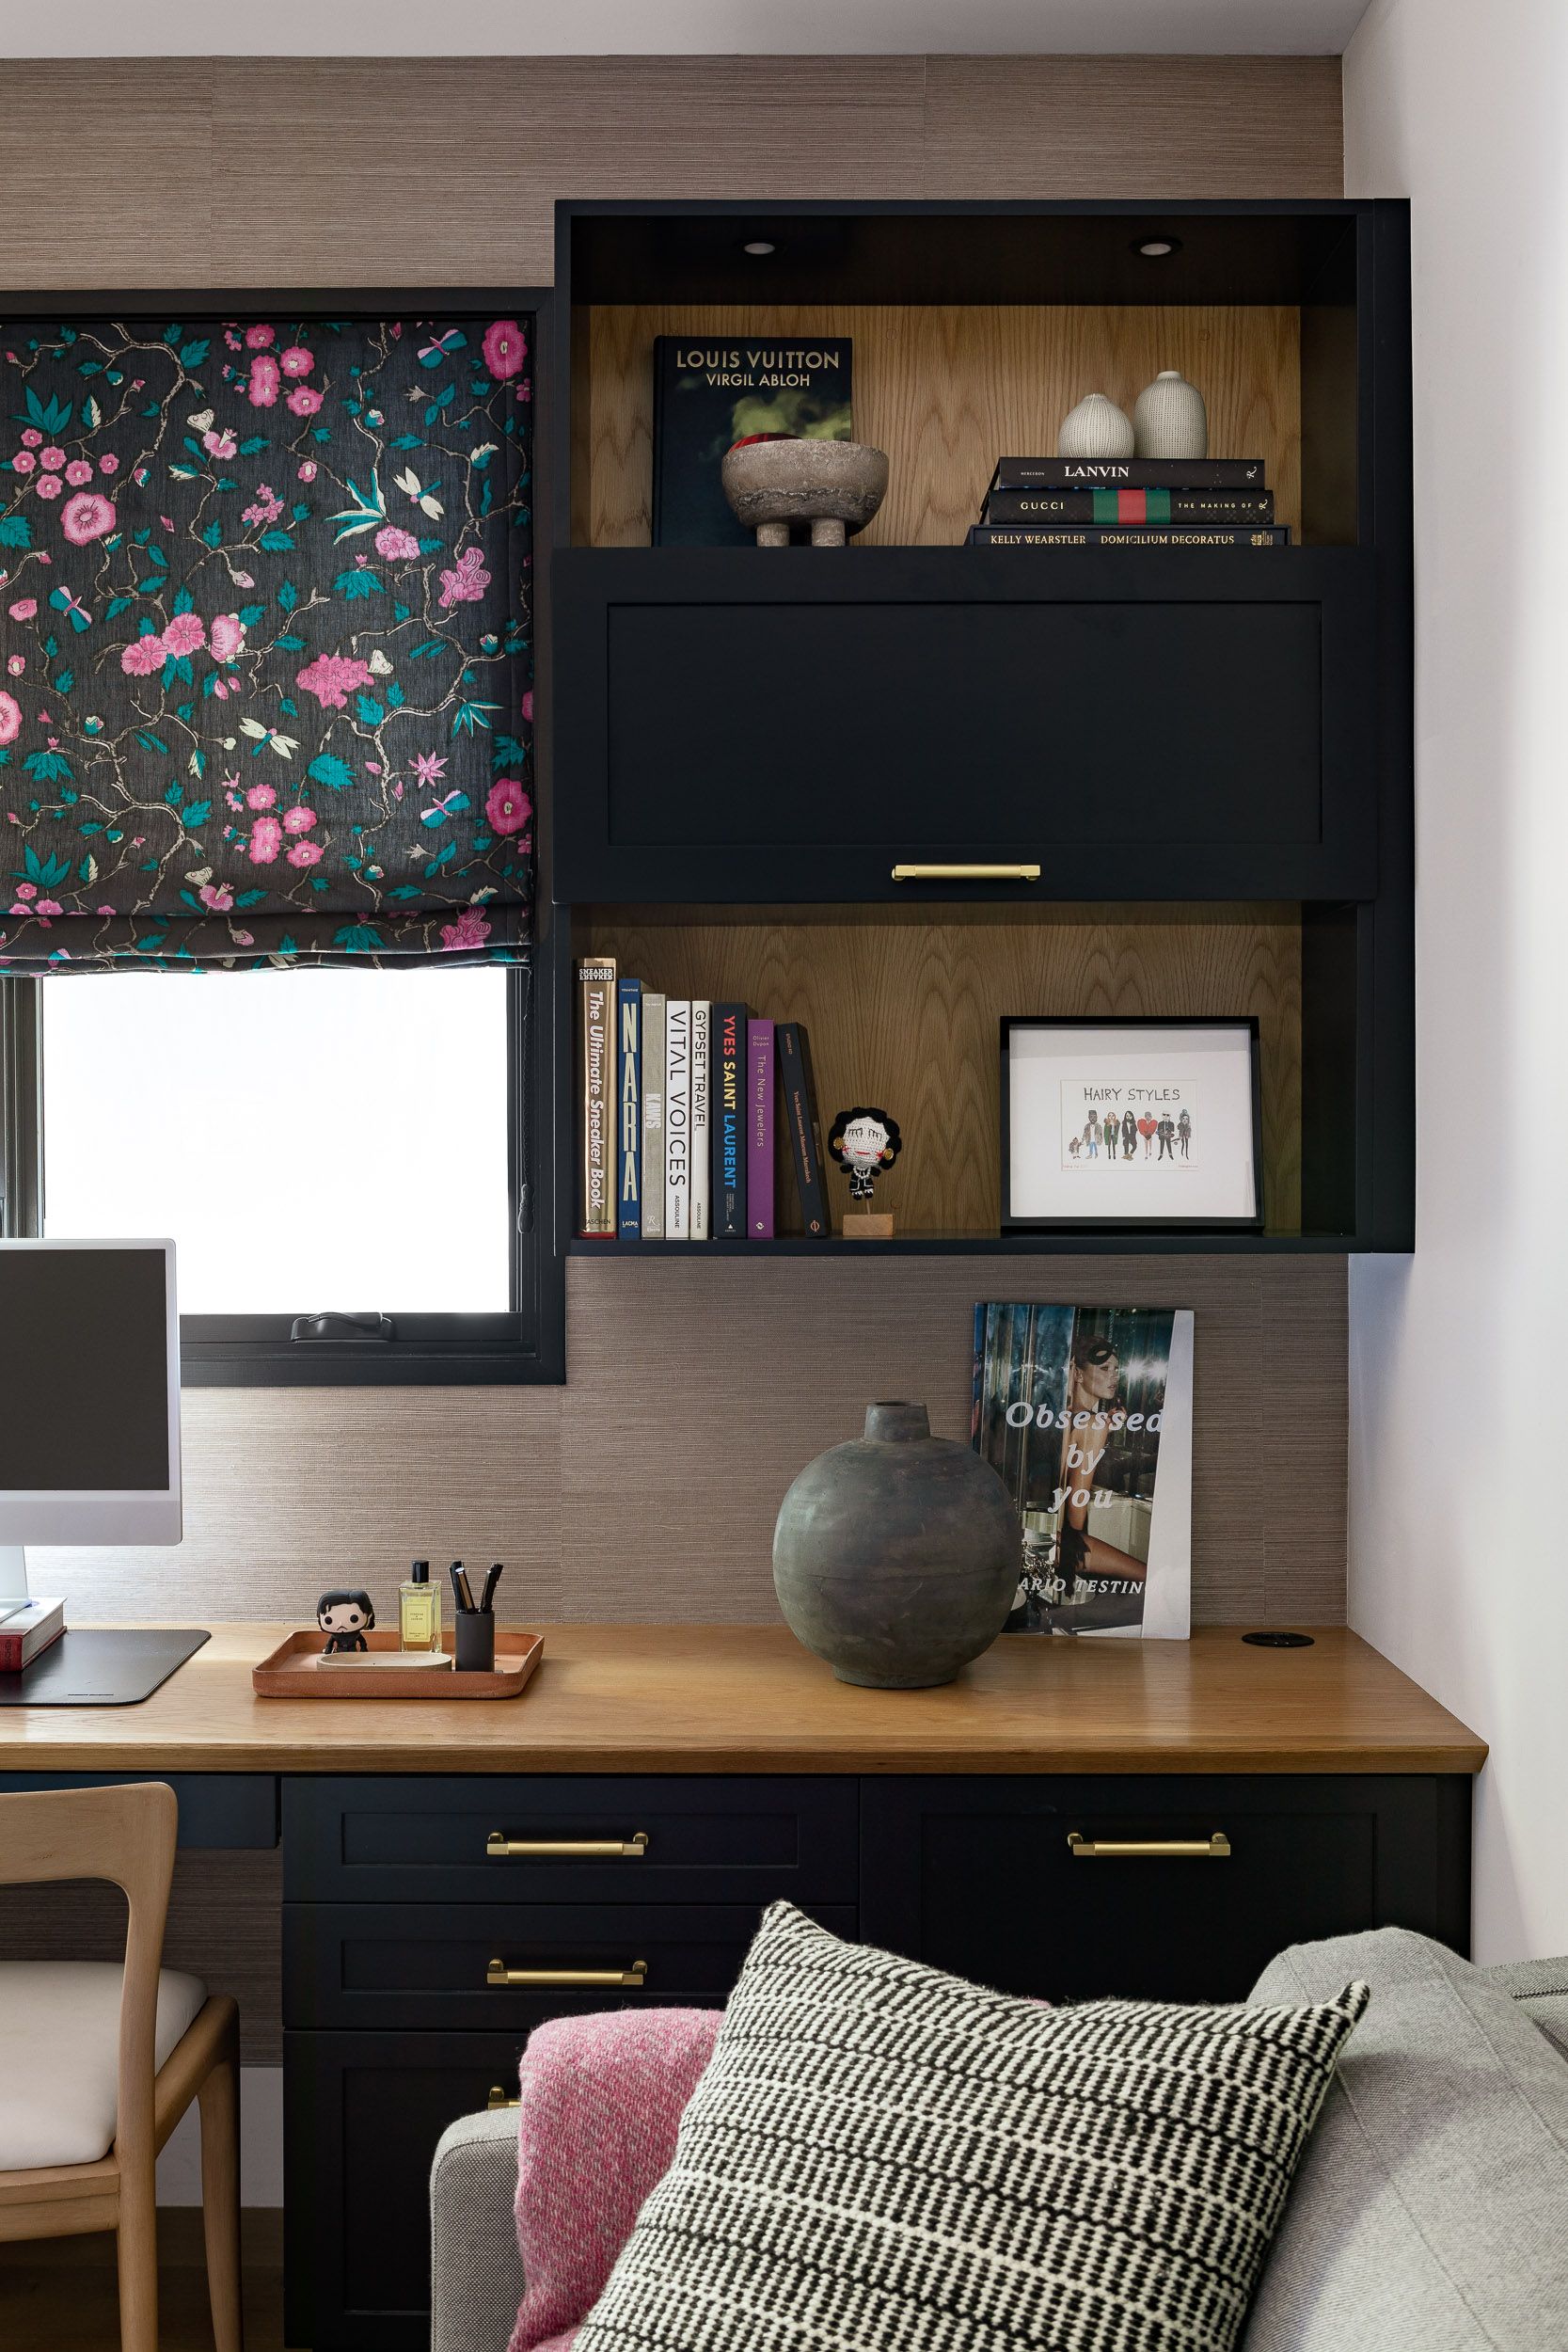 40 Genius Desk Organization Ideas to Maximize Home Offices